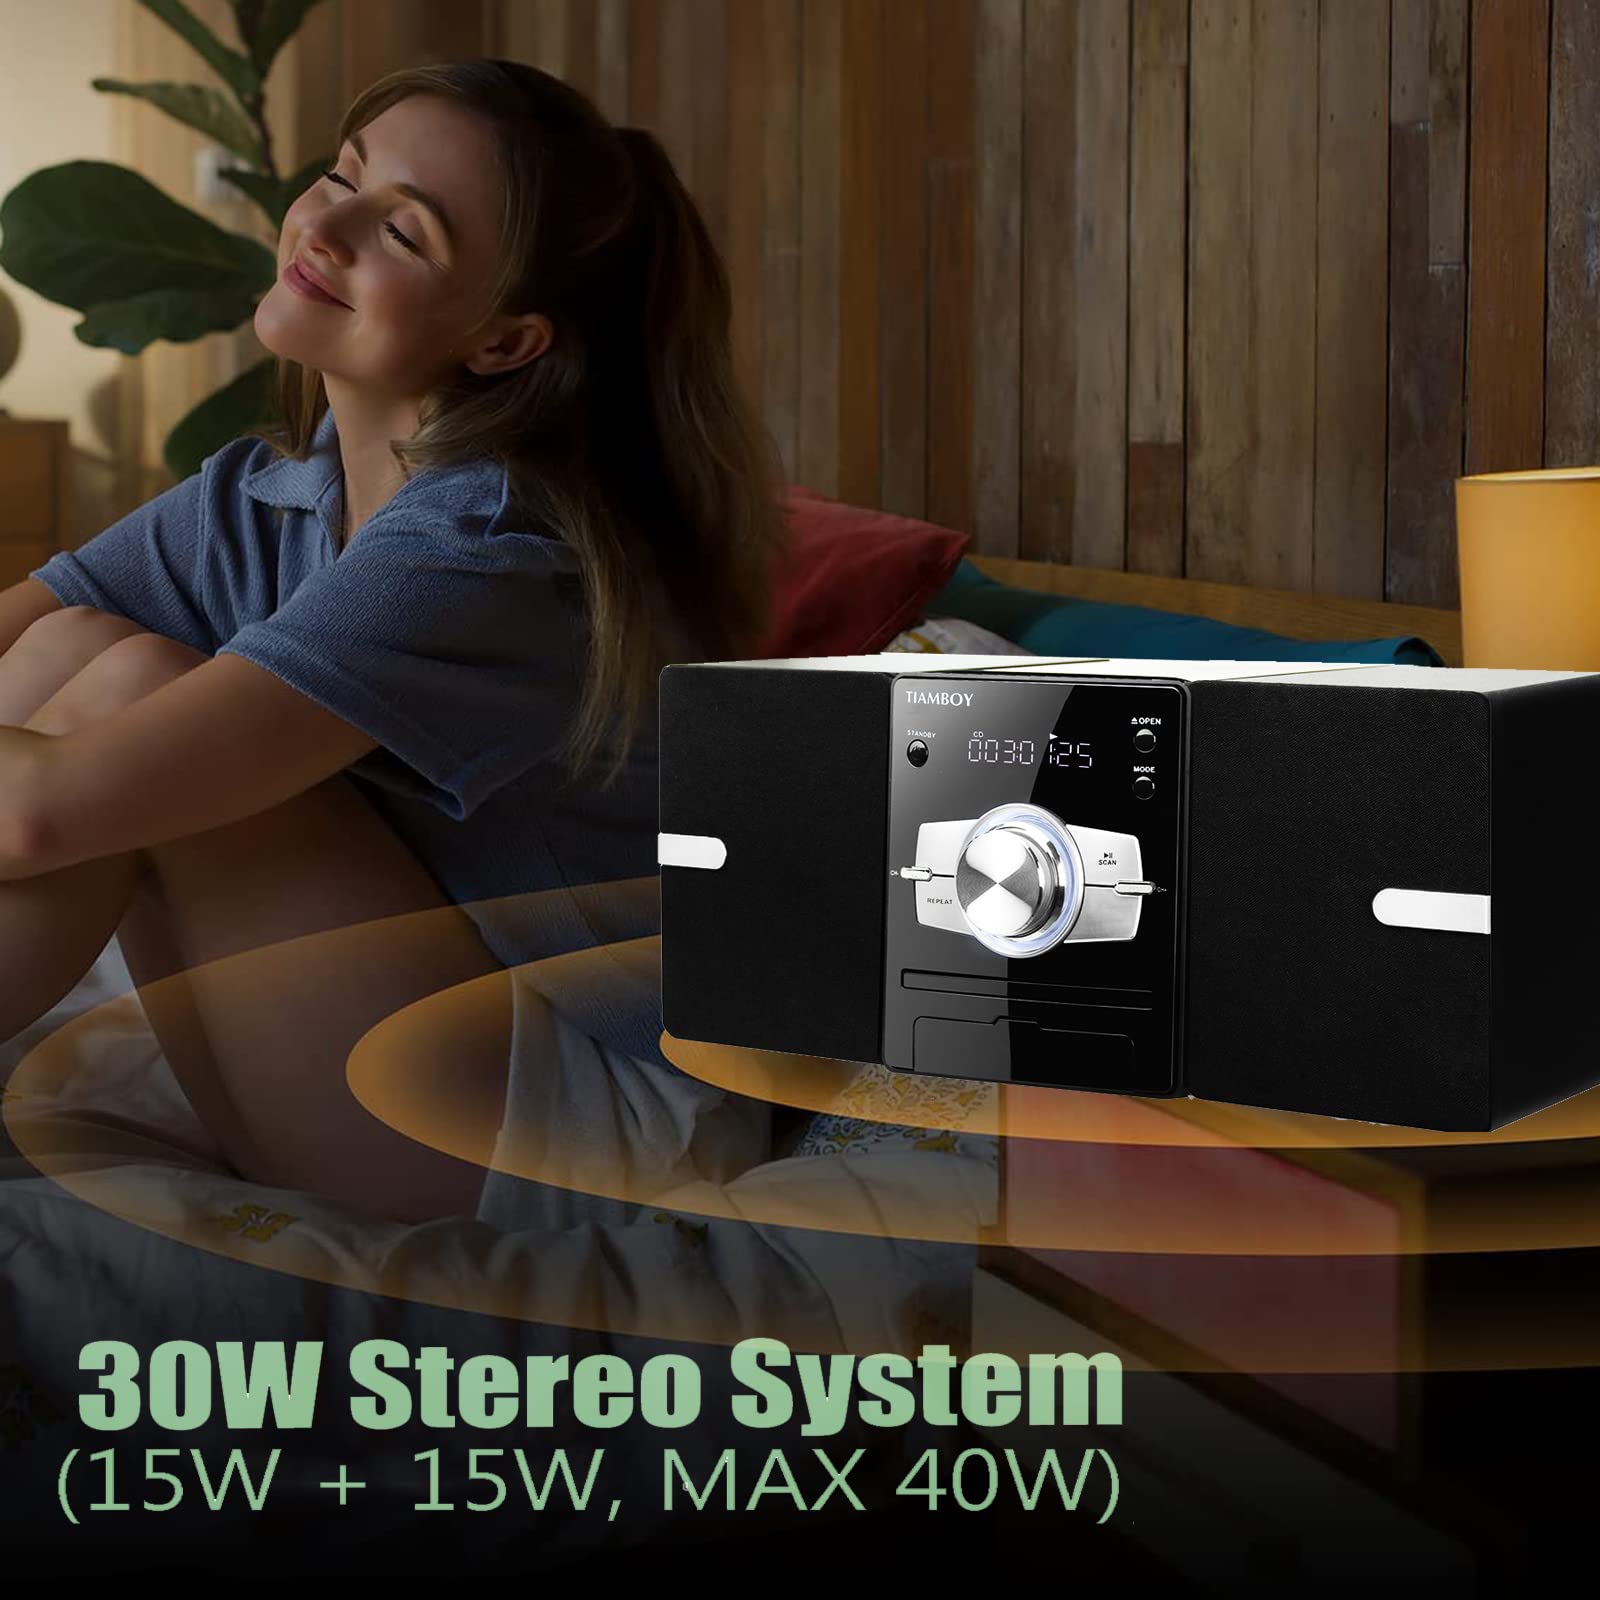 Micro CD Stereo Shelf System, 30W RMS Hi-Fi System with CD Player, Bluetooth, USB Playback, FM Radio, AUX-Input, 2-Way Music Crisp-Sound, DSP-Tech